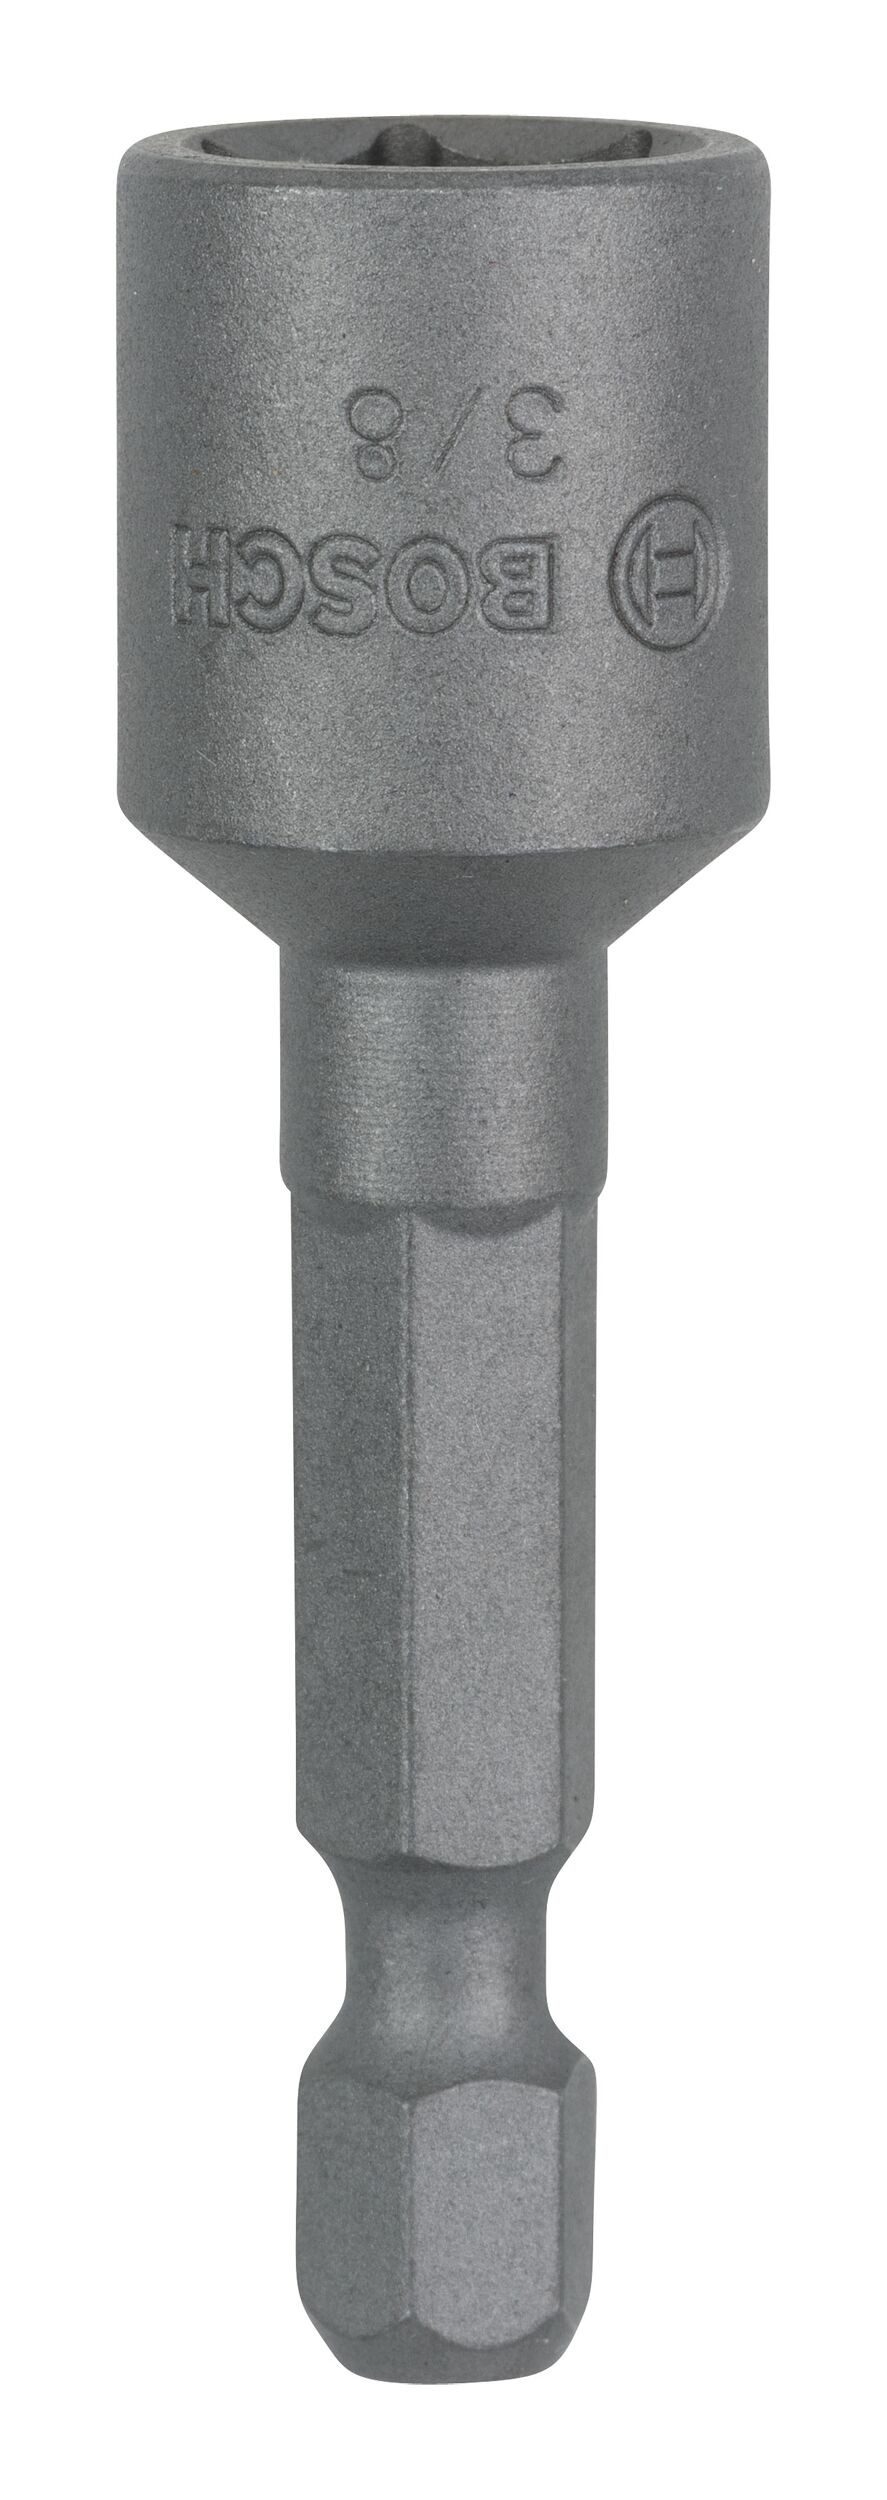 BOSCH Stecknuss, Steckschlüssel mit Magnet - 50 mm x 3/8"